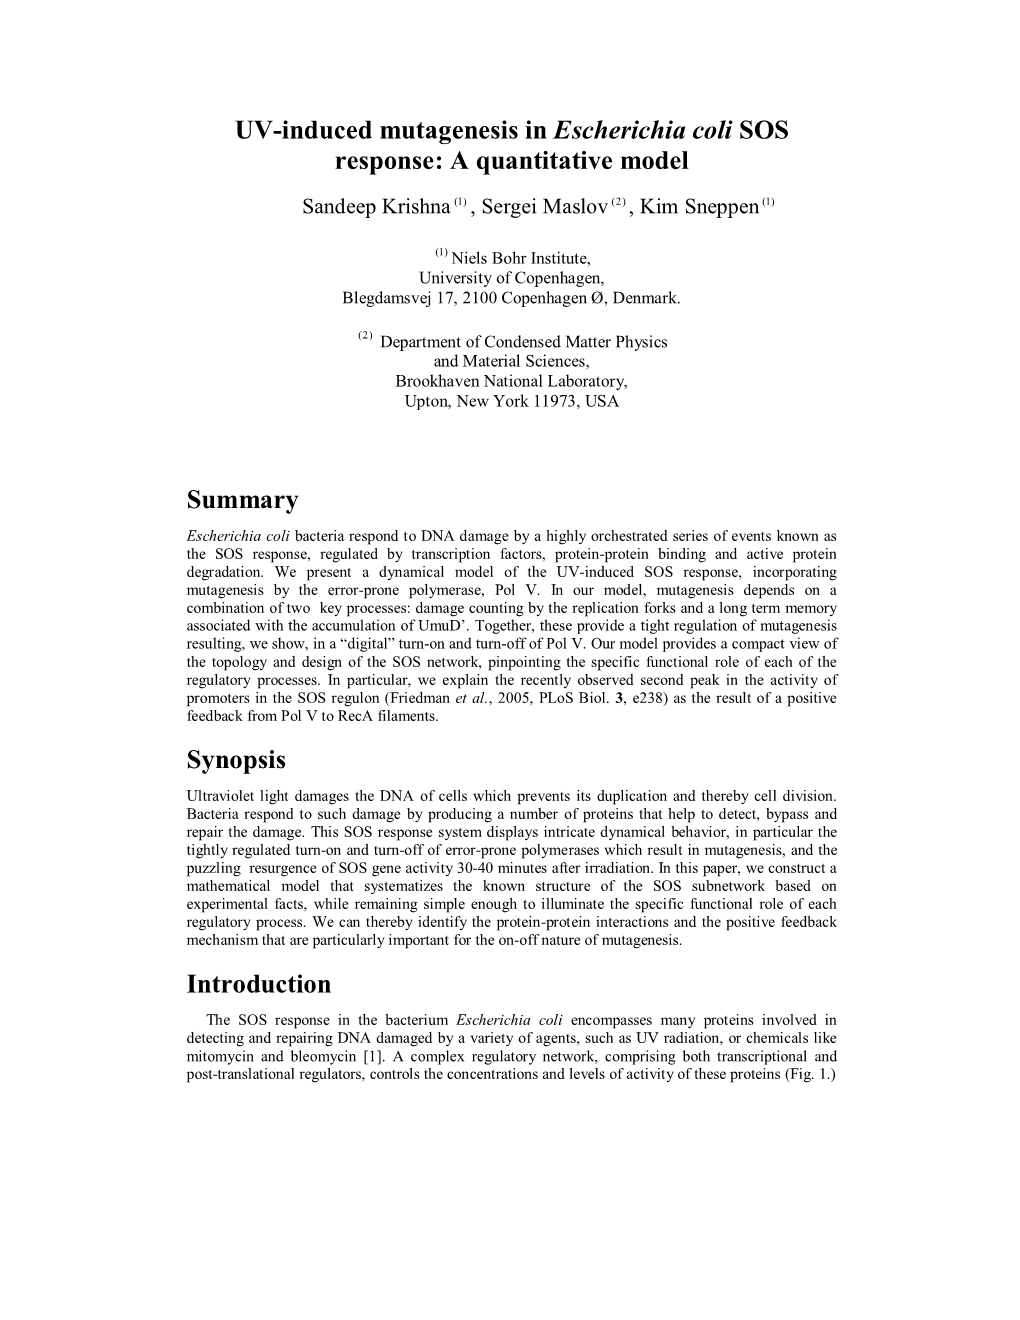 UV-Induced Mutagenesis in Escherichia Coli SOS Response: a Quantitative Model